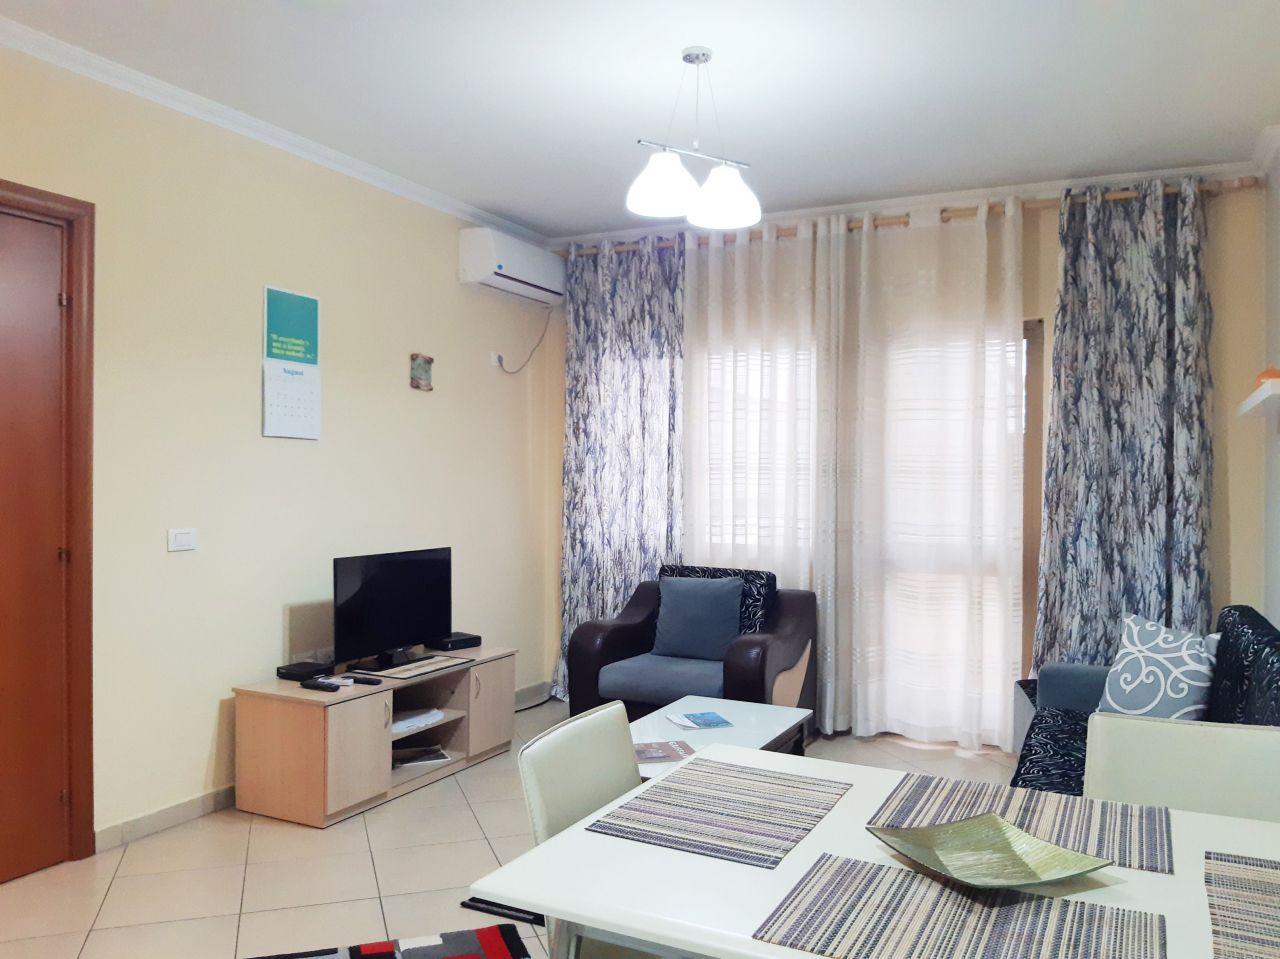 Rent One Bedroom Apartment In Tirane Albania At Him Kolli Street